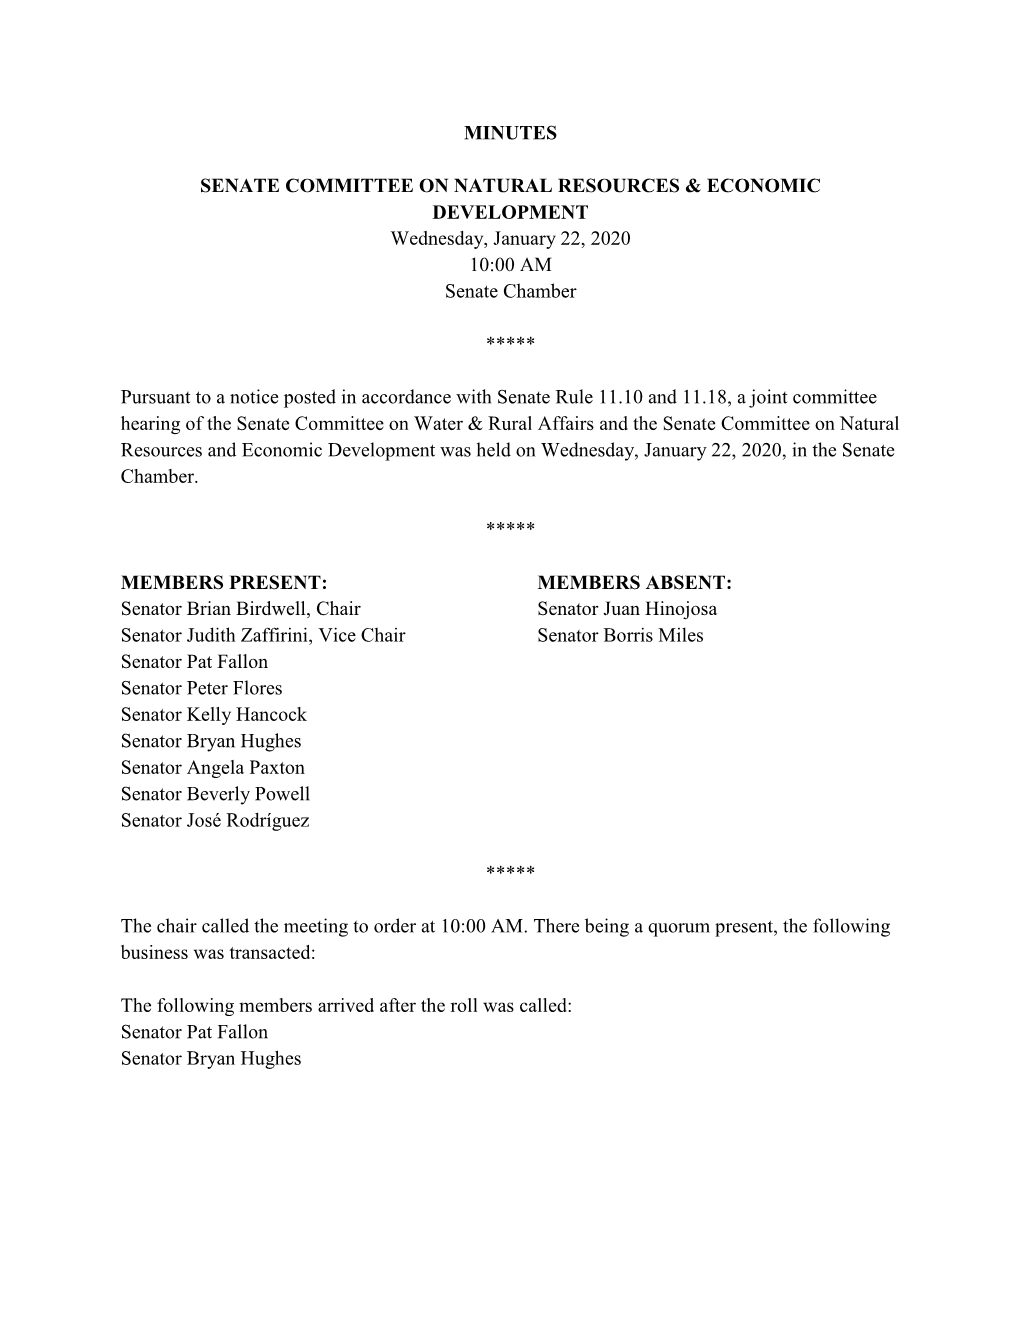 MINUTES SENATE COMMITTEE on NATURAL RESOURCES & ECONOMIC DEVELOPMENT Wednesday, January 22, 2020 10:00 AM Senate Chamber **